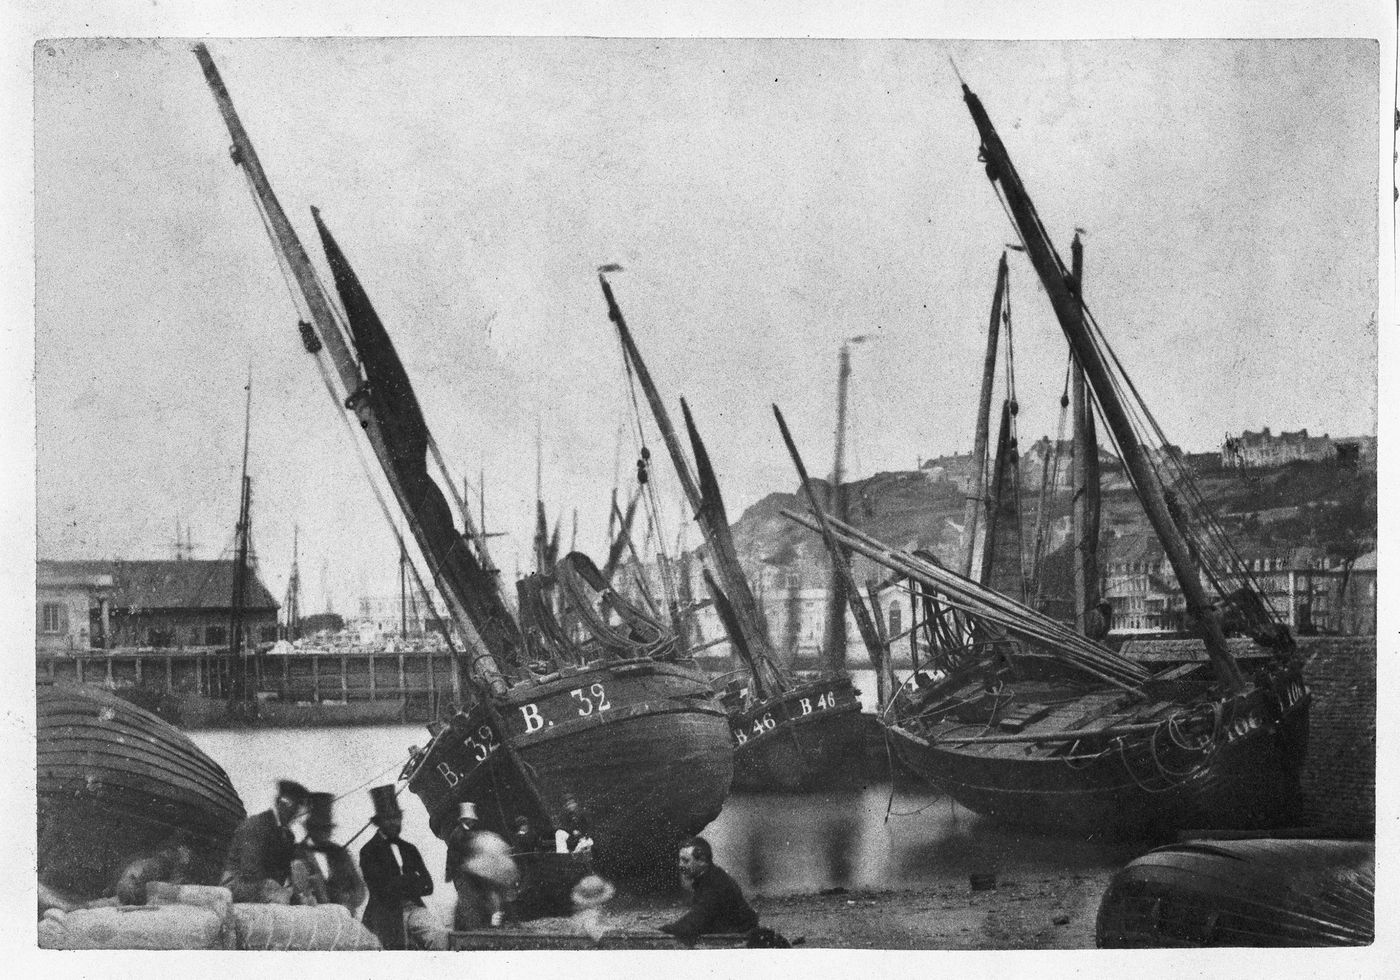 Sailing boats at port in Boulogne-sur-Mer, France